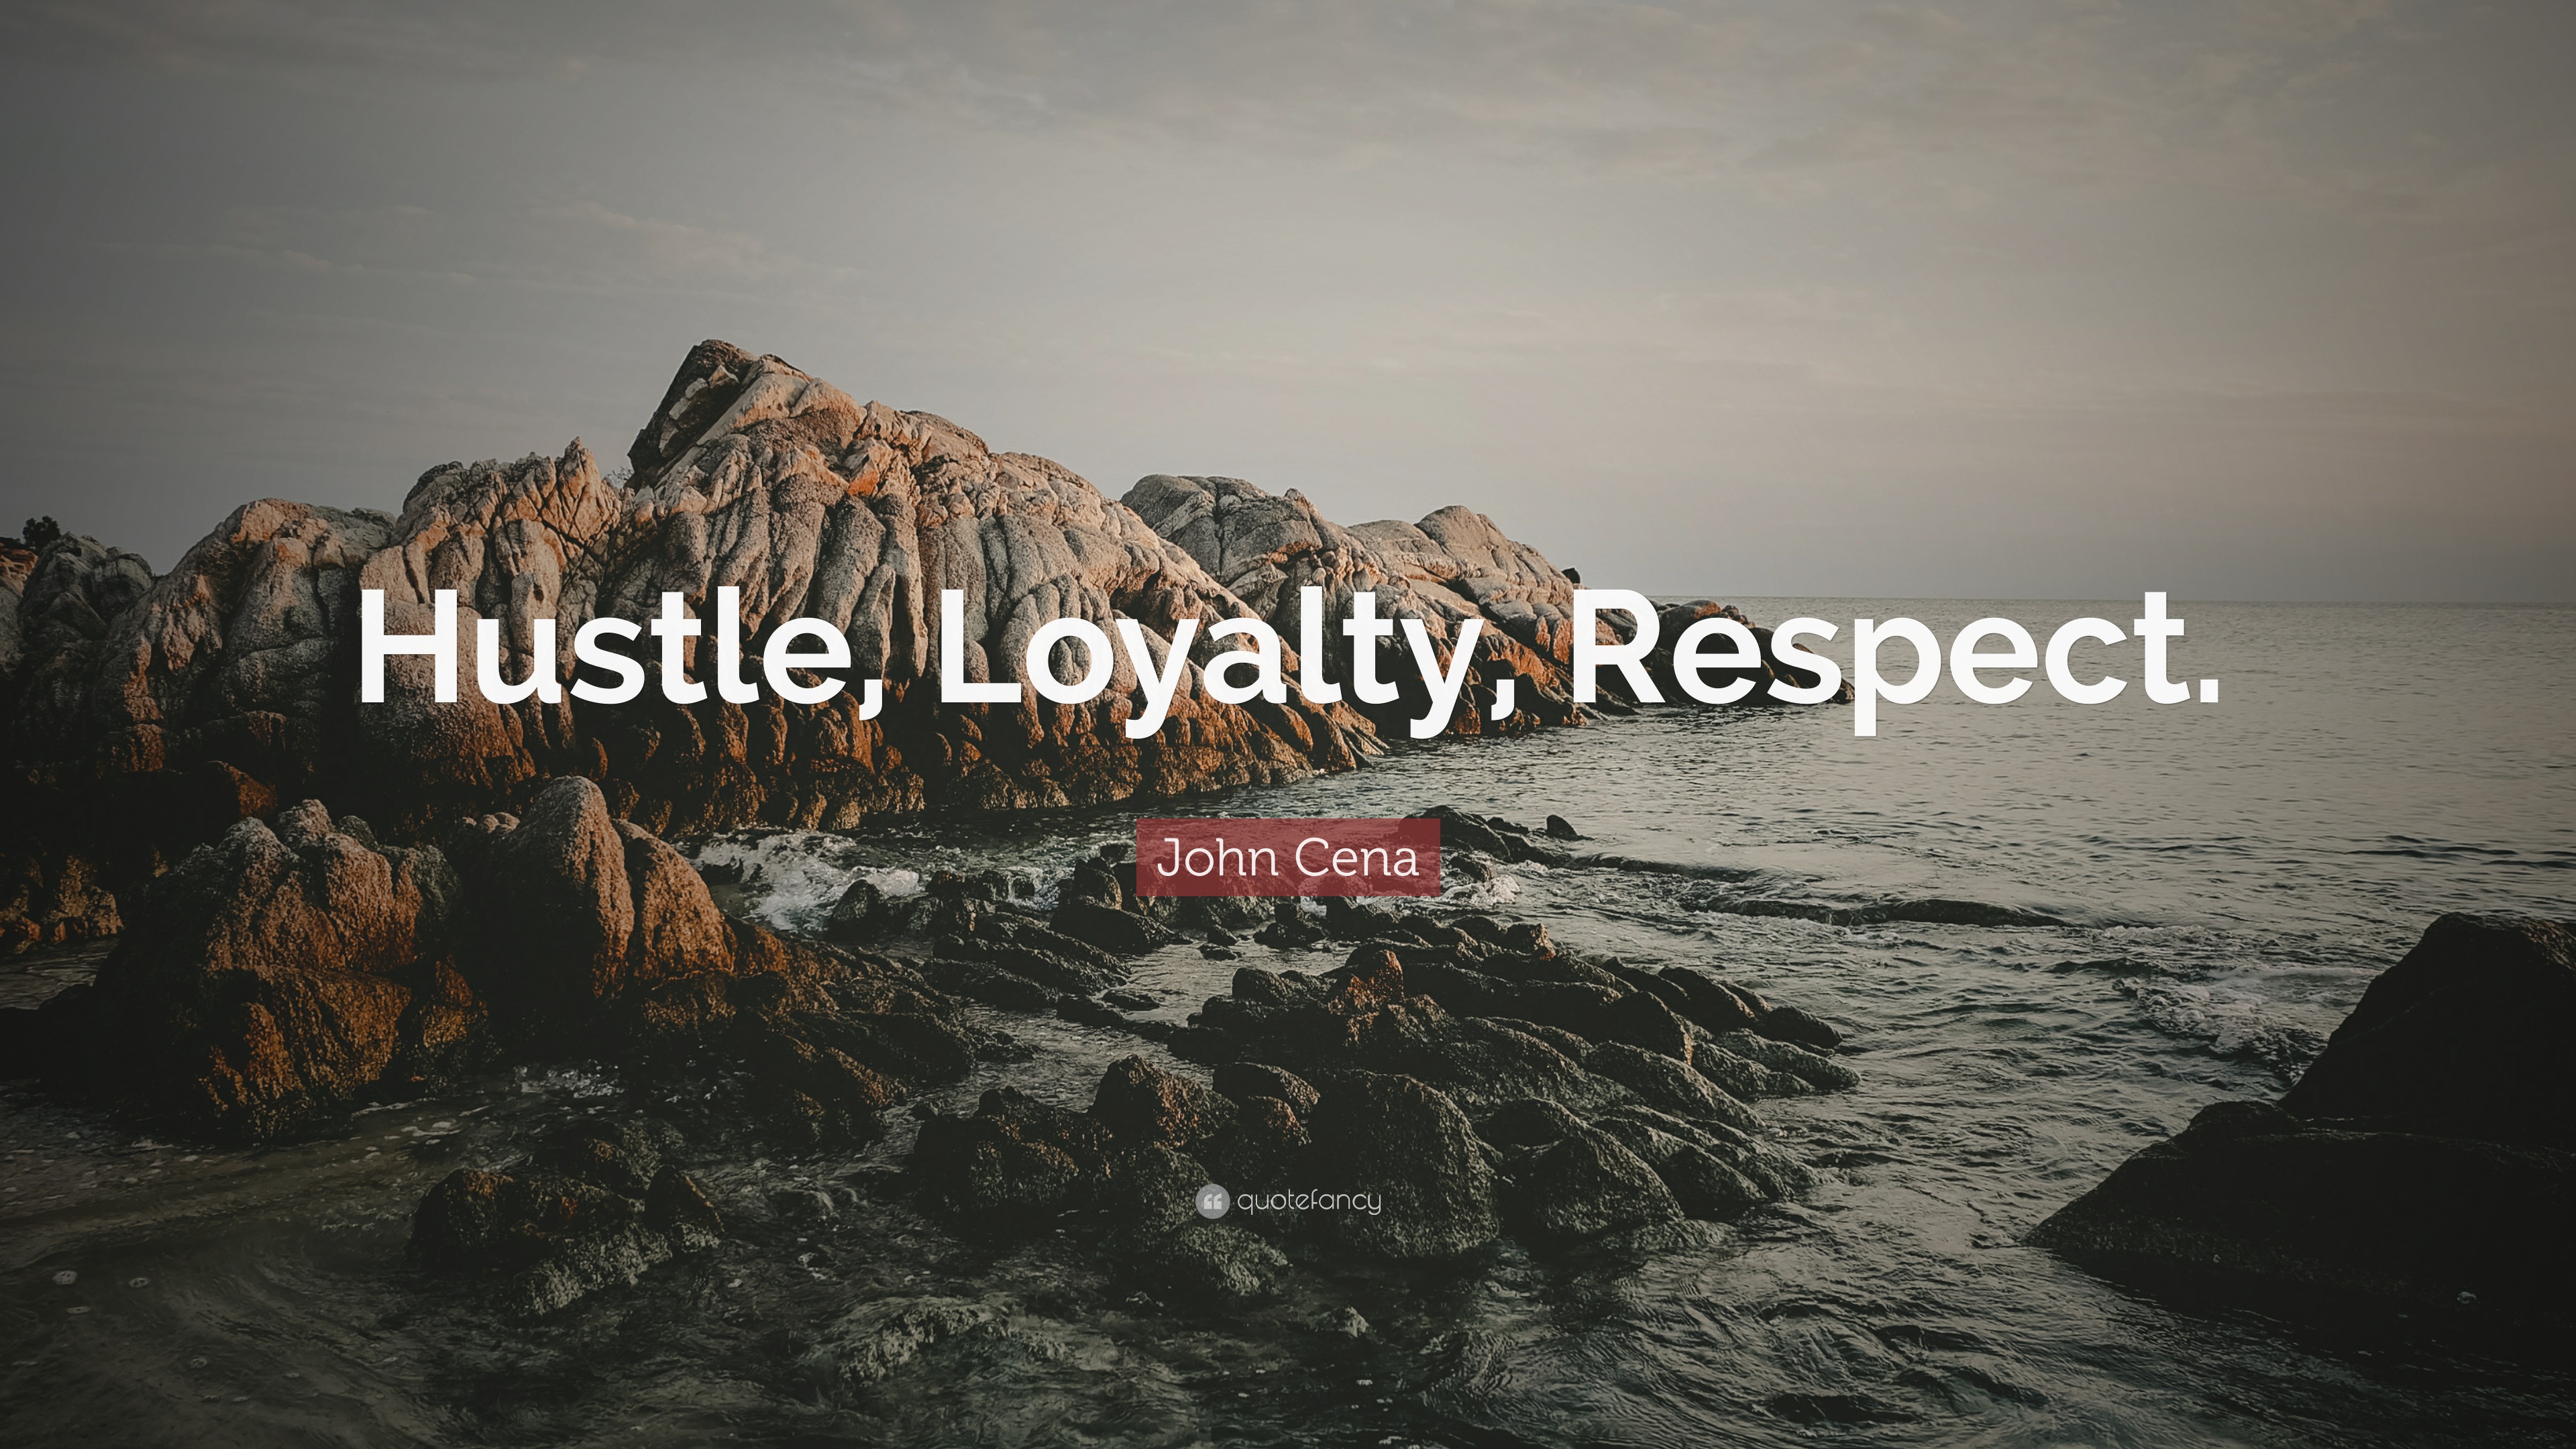 John Cena Quote: “Hustle, Loyalty, Respect.”